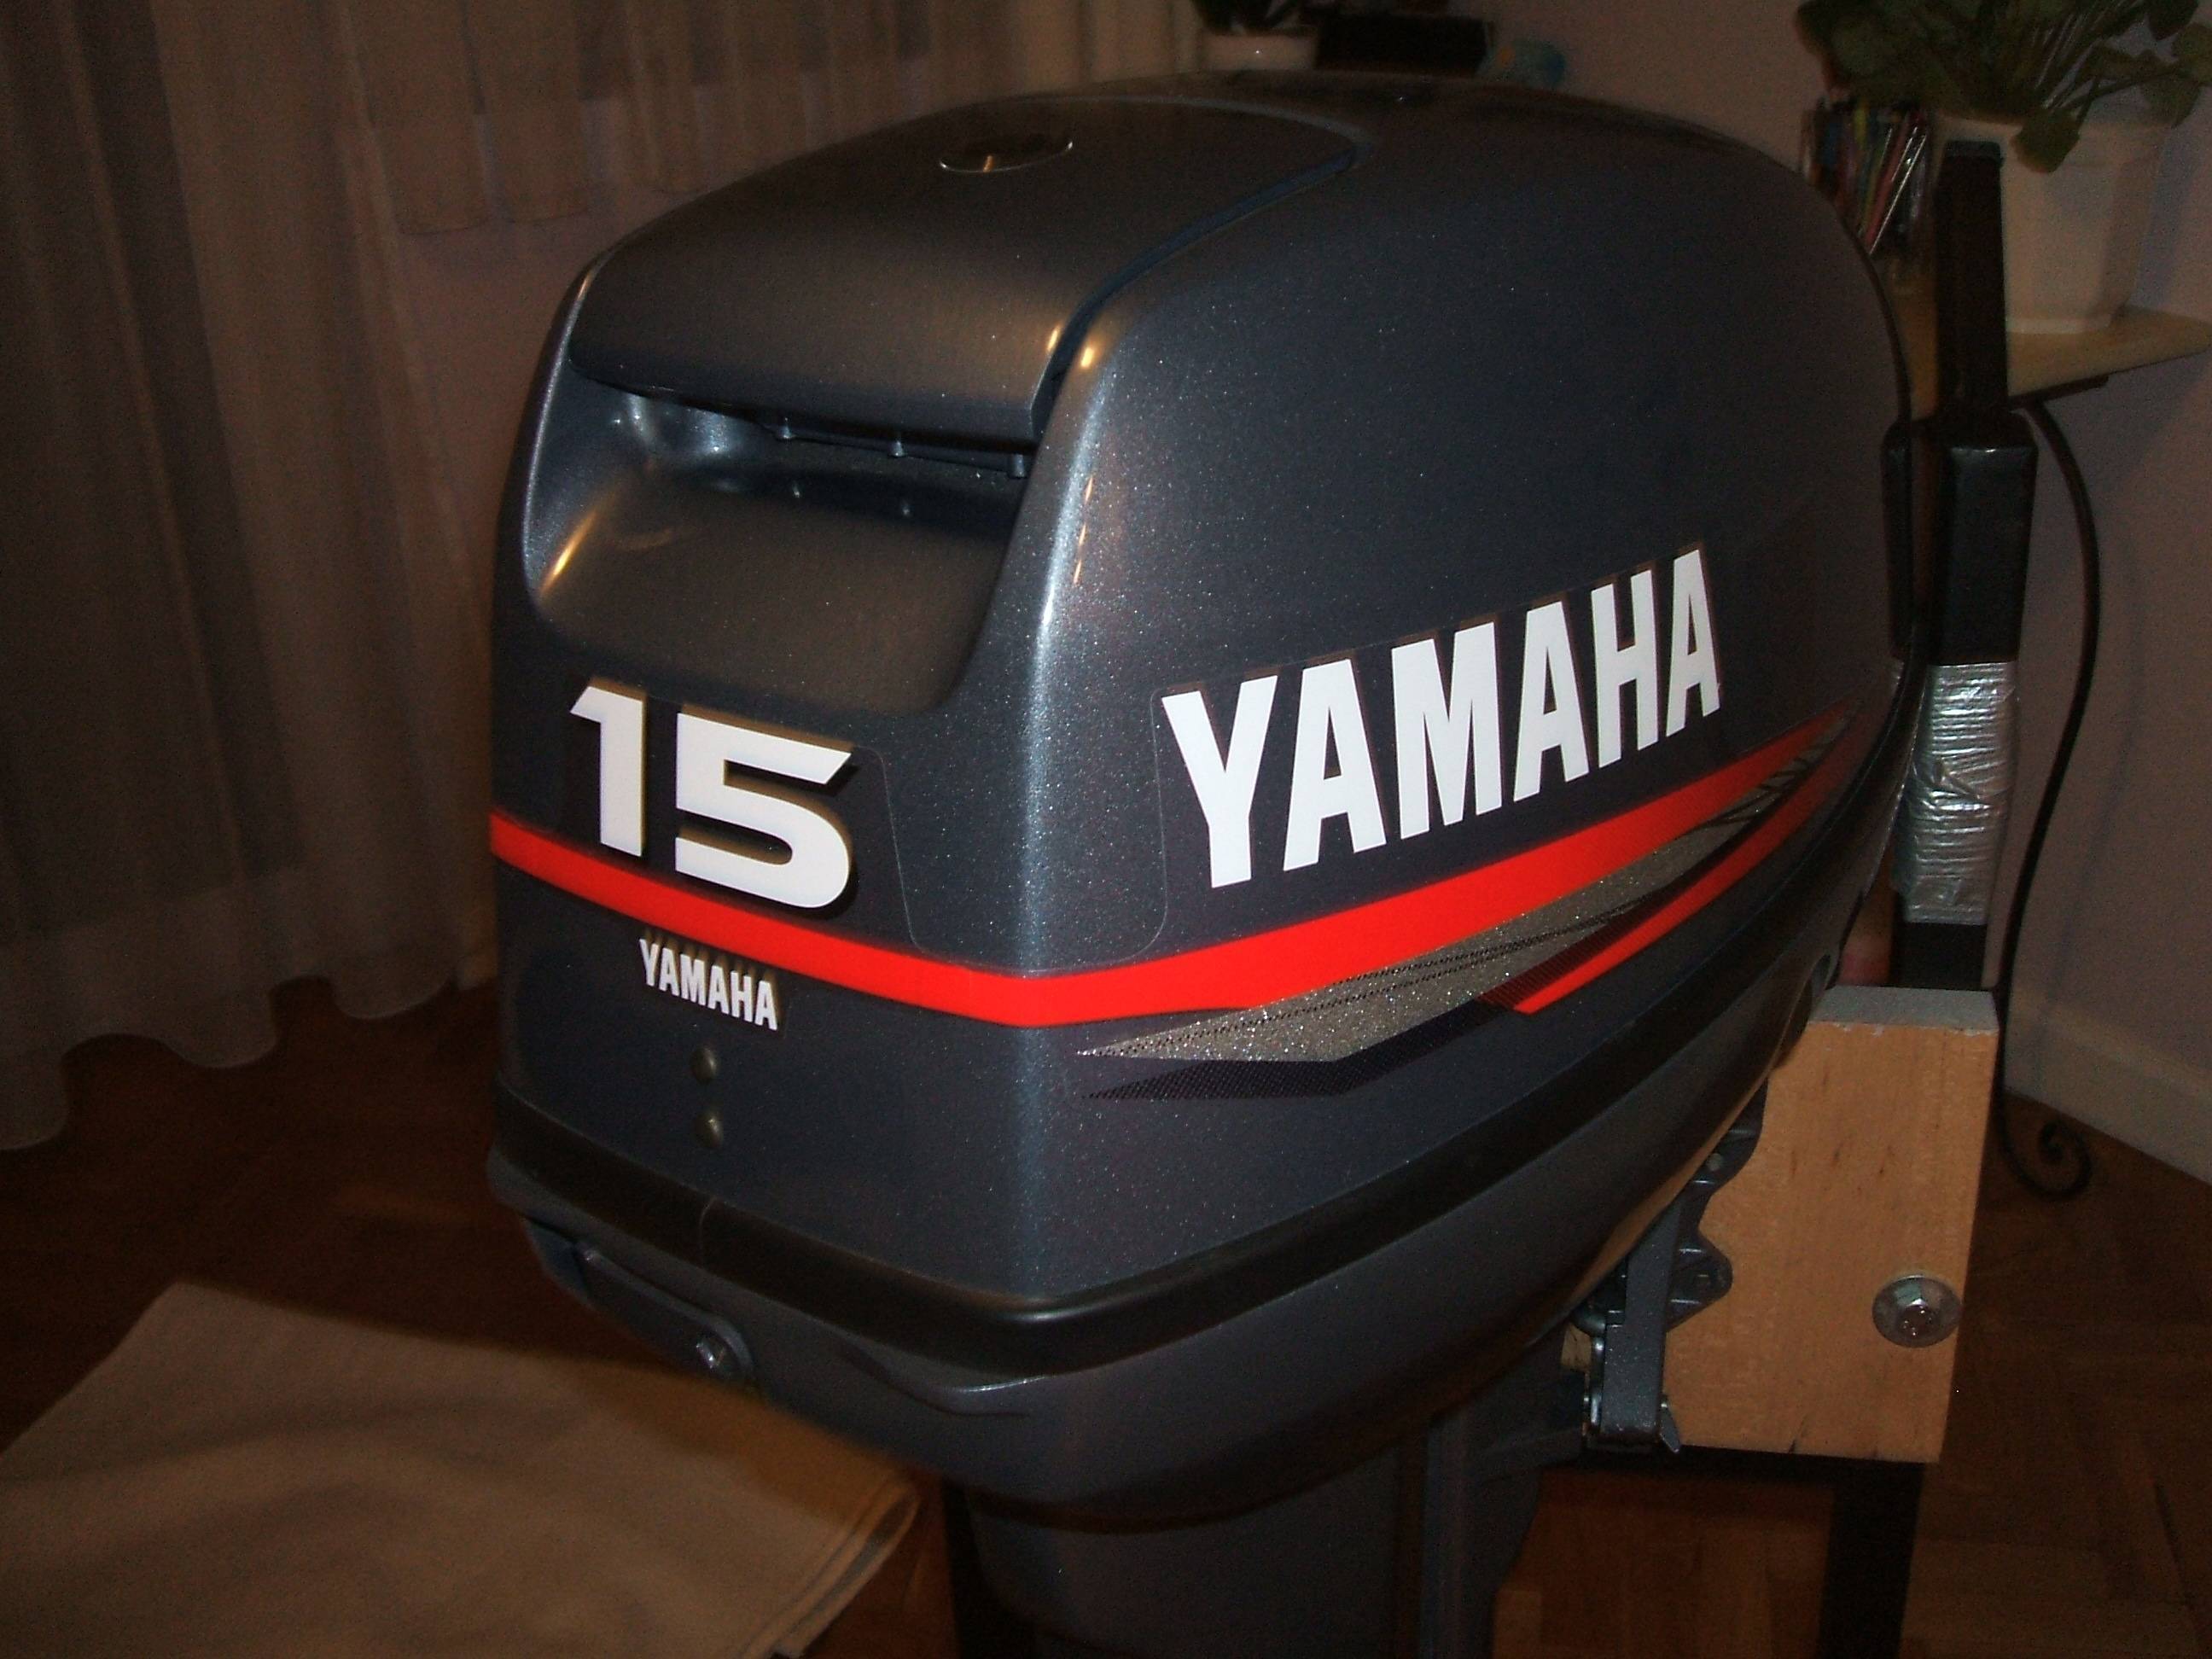 Yamaha 9 9 купить. Мотор Ямаха 15 2т. Лодочный мотор Yamaha 15 FMHS. Yamaha 9.9 15 FMHS. Yamaha 9.9 FMHS.